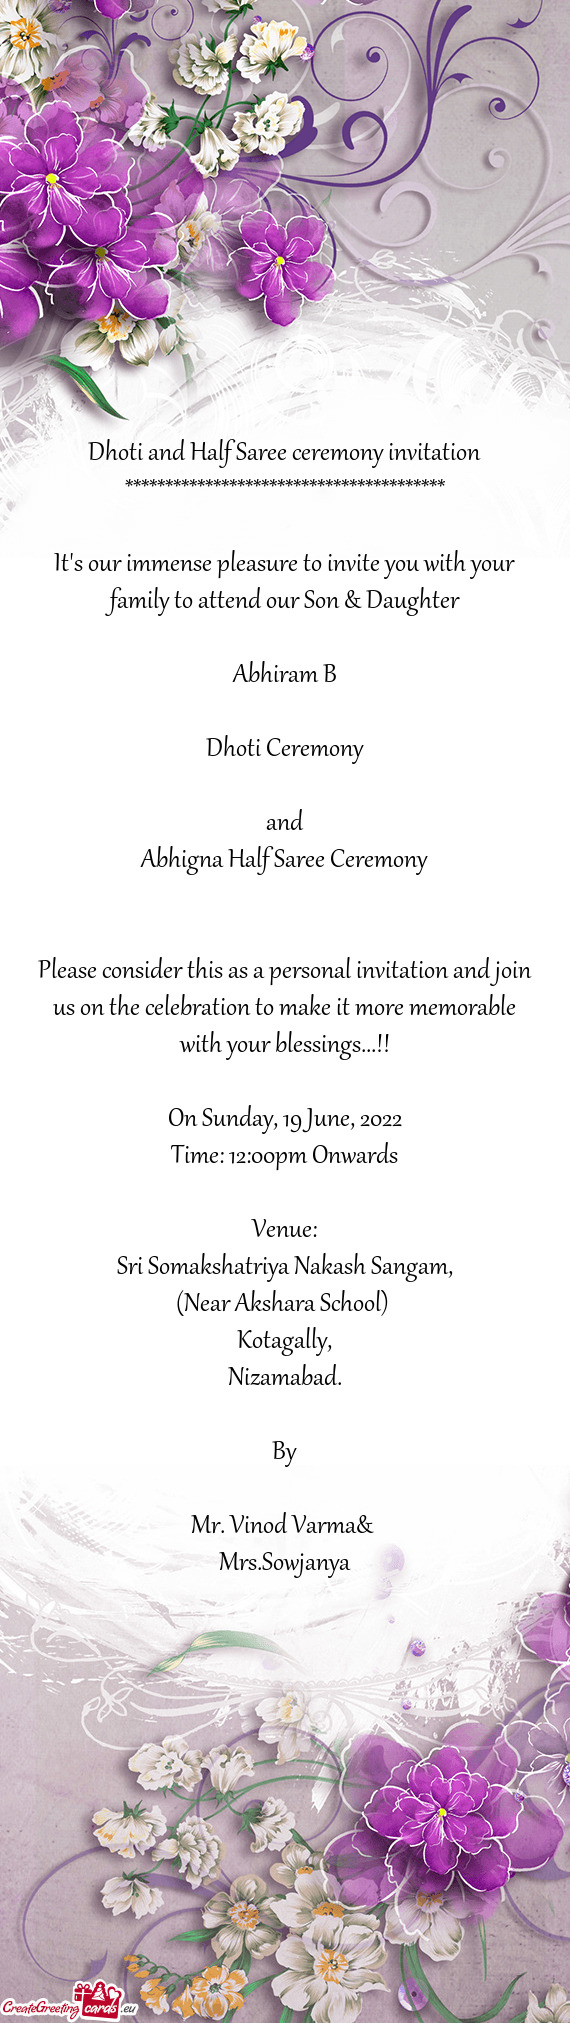 Abhigna Half Saree Ceremony